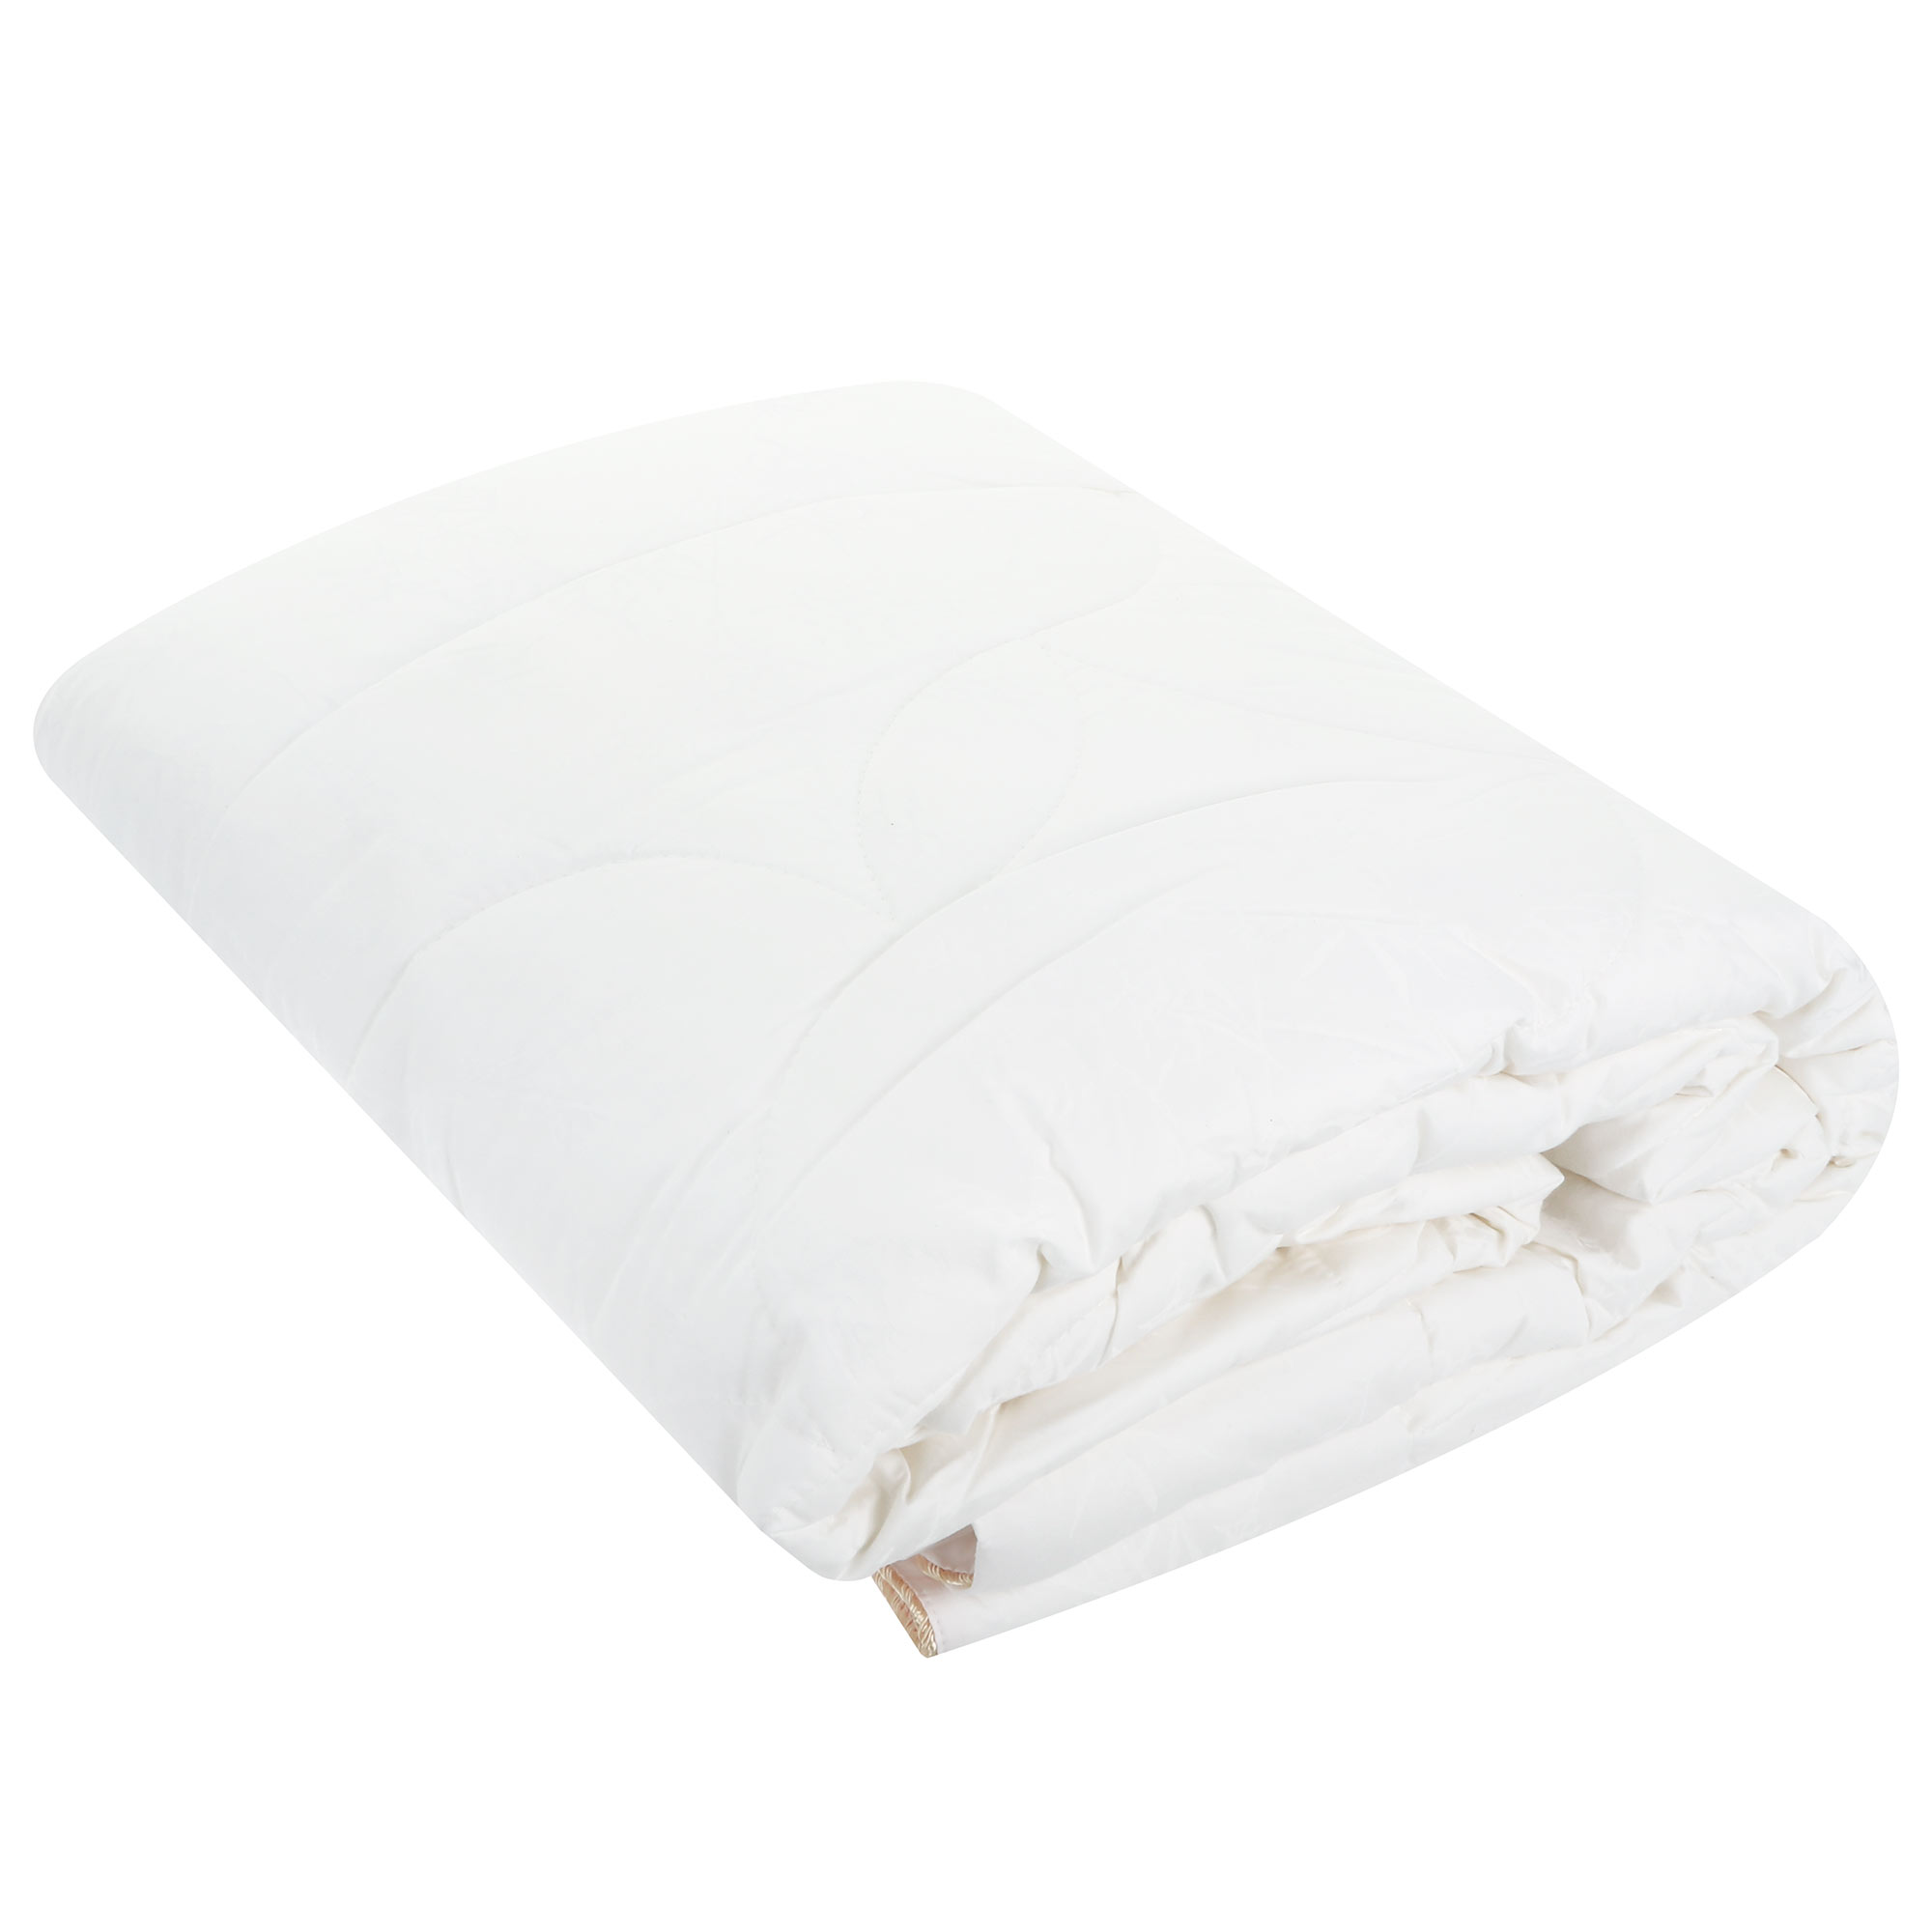 Одеяло Wonne Traum Bamboo 200х220 см, цвет белый - фото 1